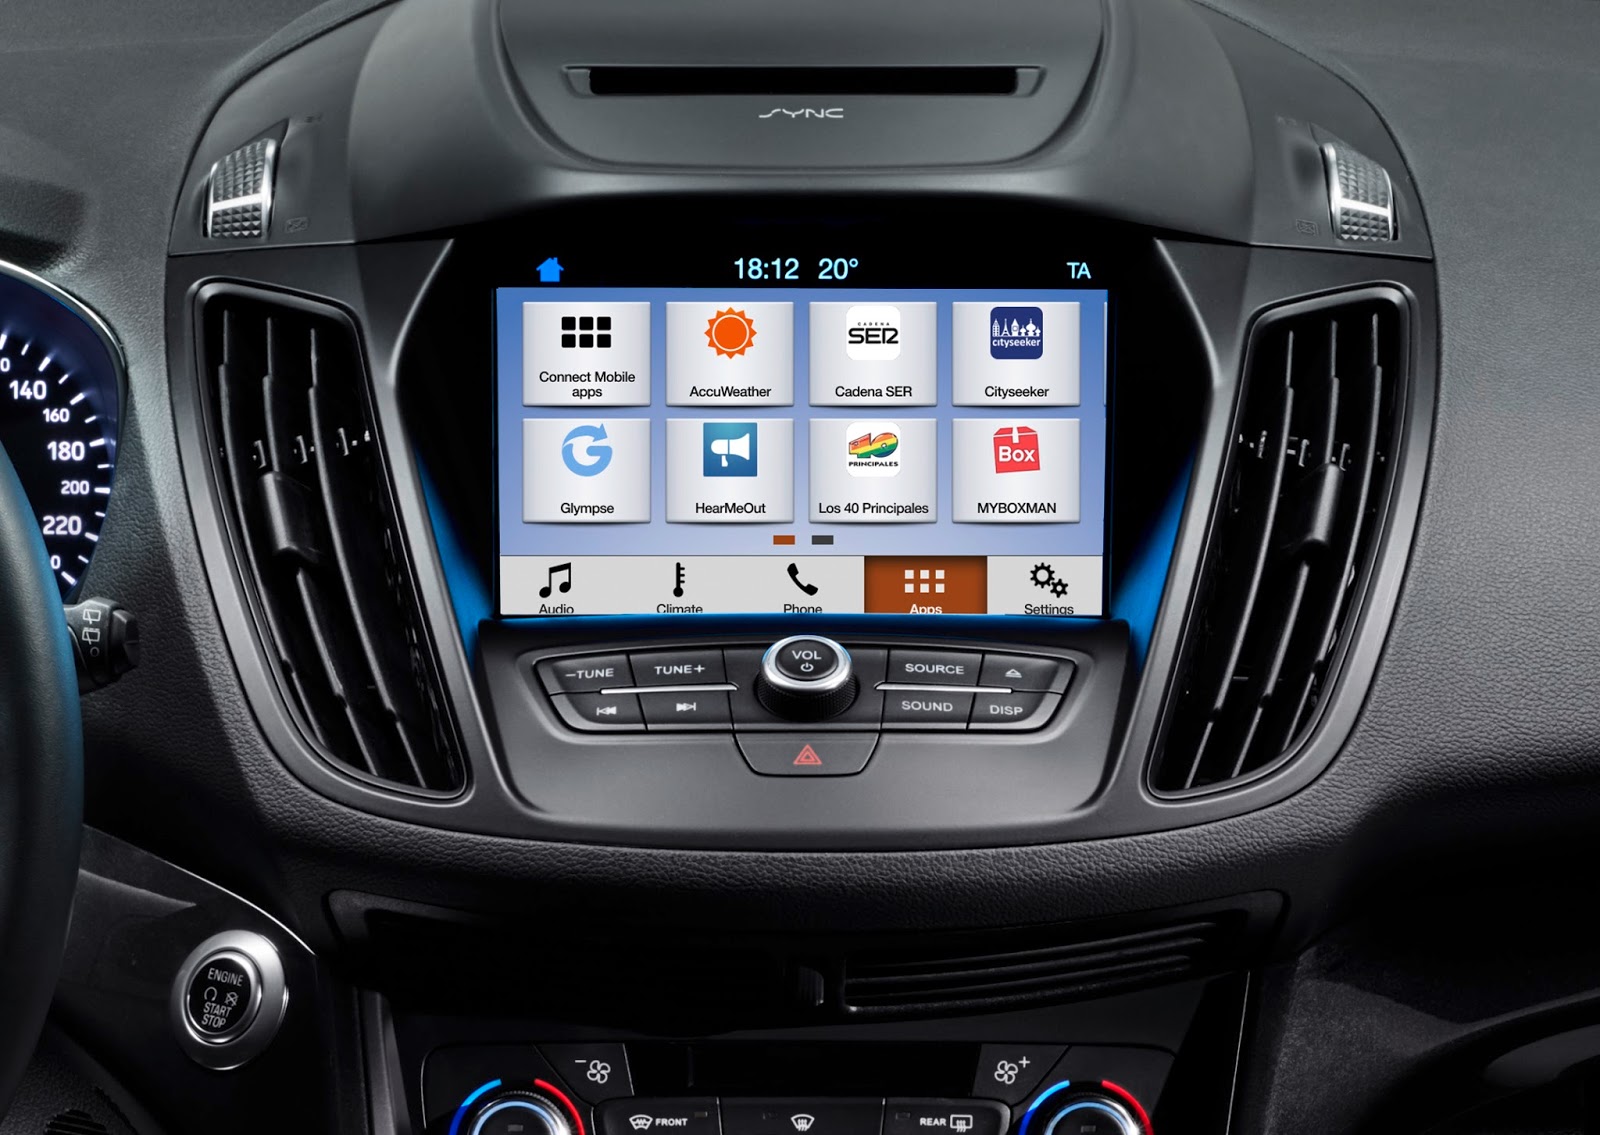 Ford2016 KugaMCA Sync3 Apps 16 Τα Ford Mondeo, S-MAX και Galaxy διατίθενται τώρα με το νέο σύστημα επικοινωνίας & ψυχαγωγίας της Ford, SYNC 3